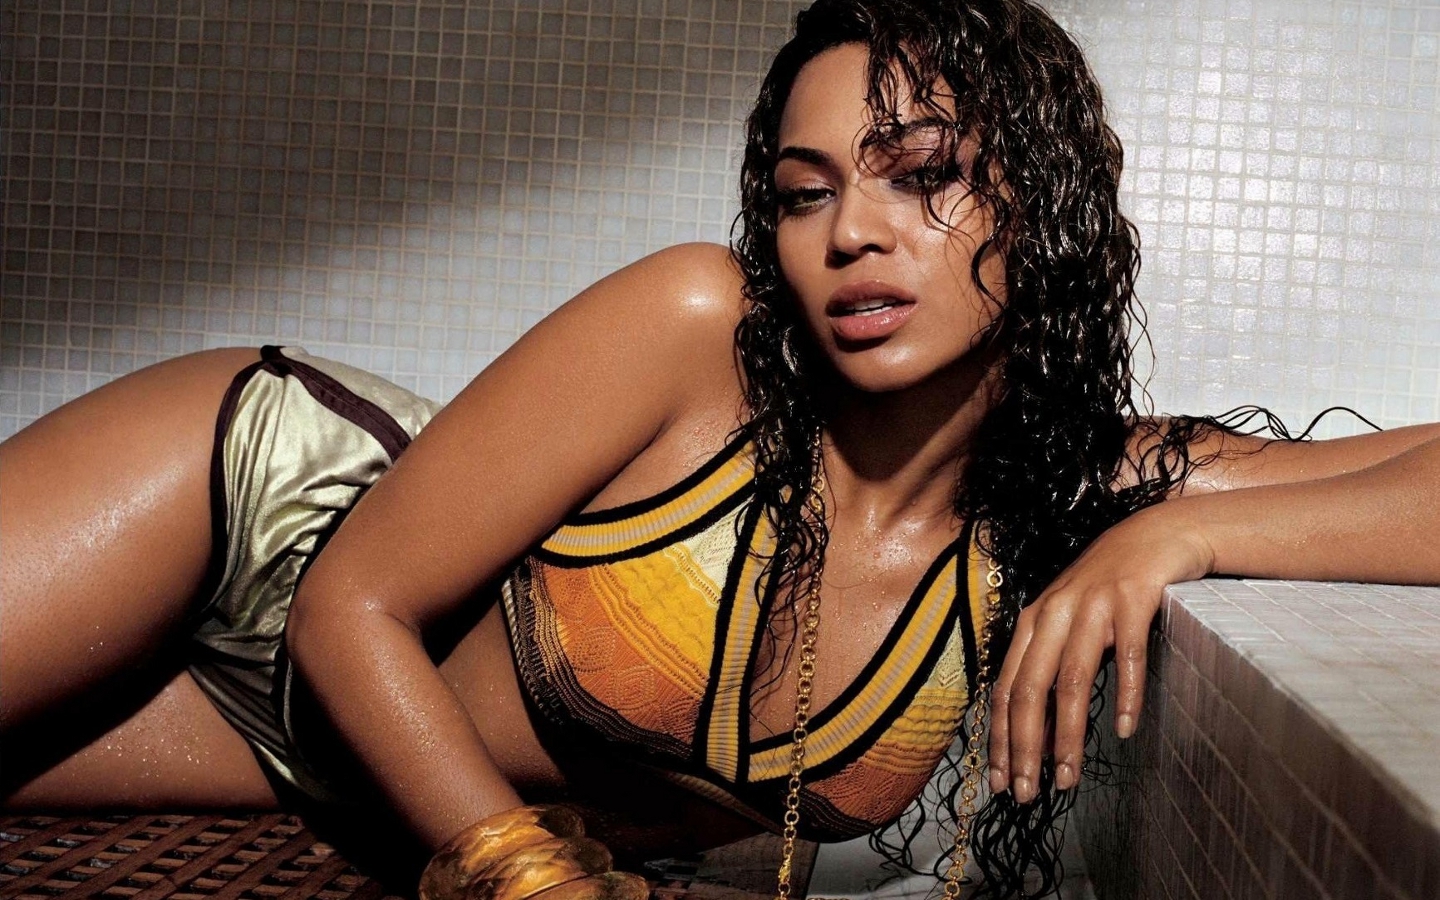 Beyonce in the bathroom - Beyonce Wallpaper (35800967) - Fanpop